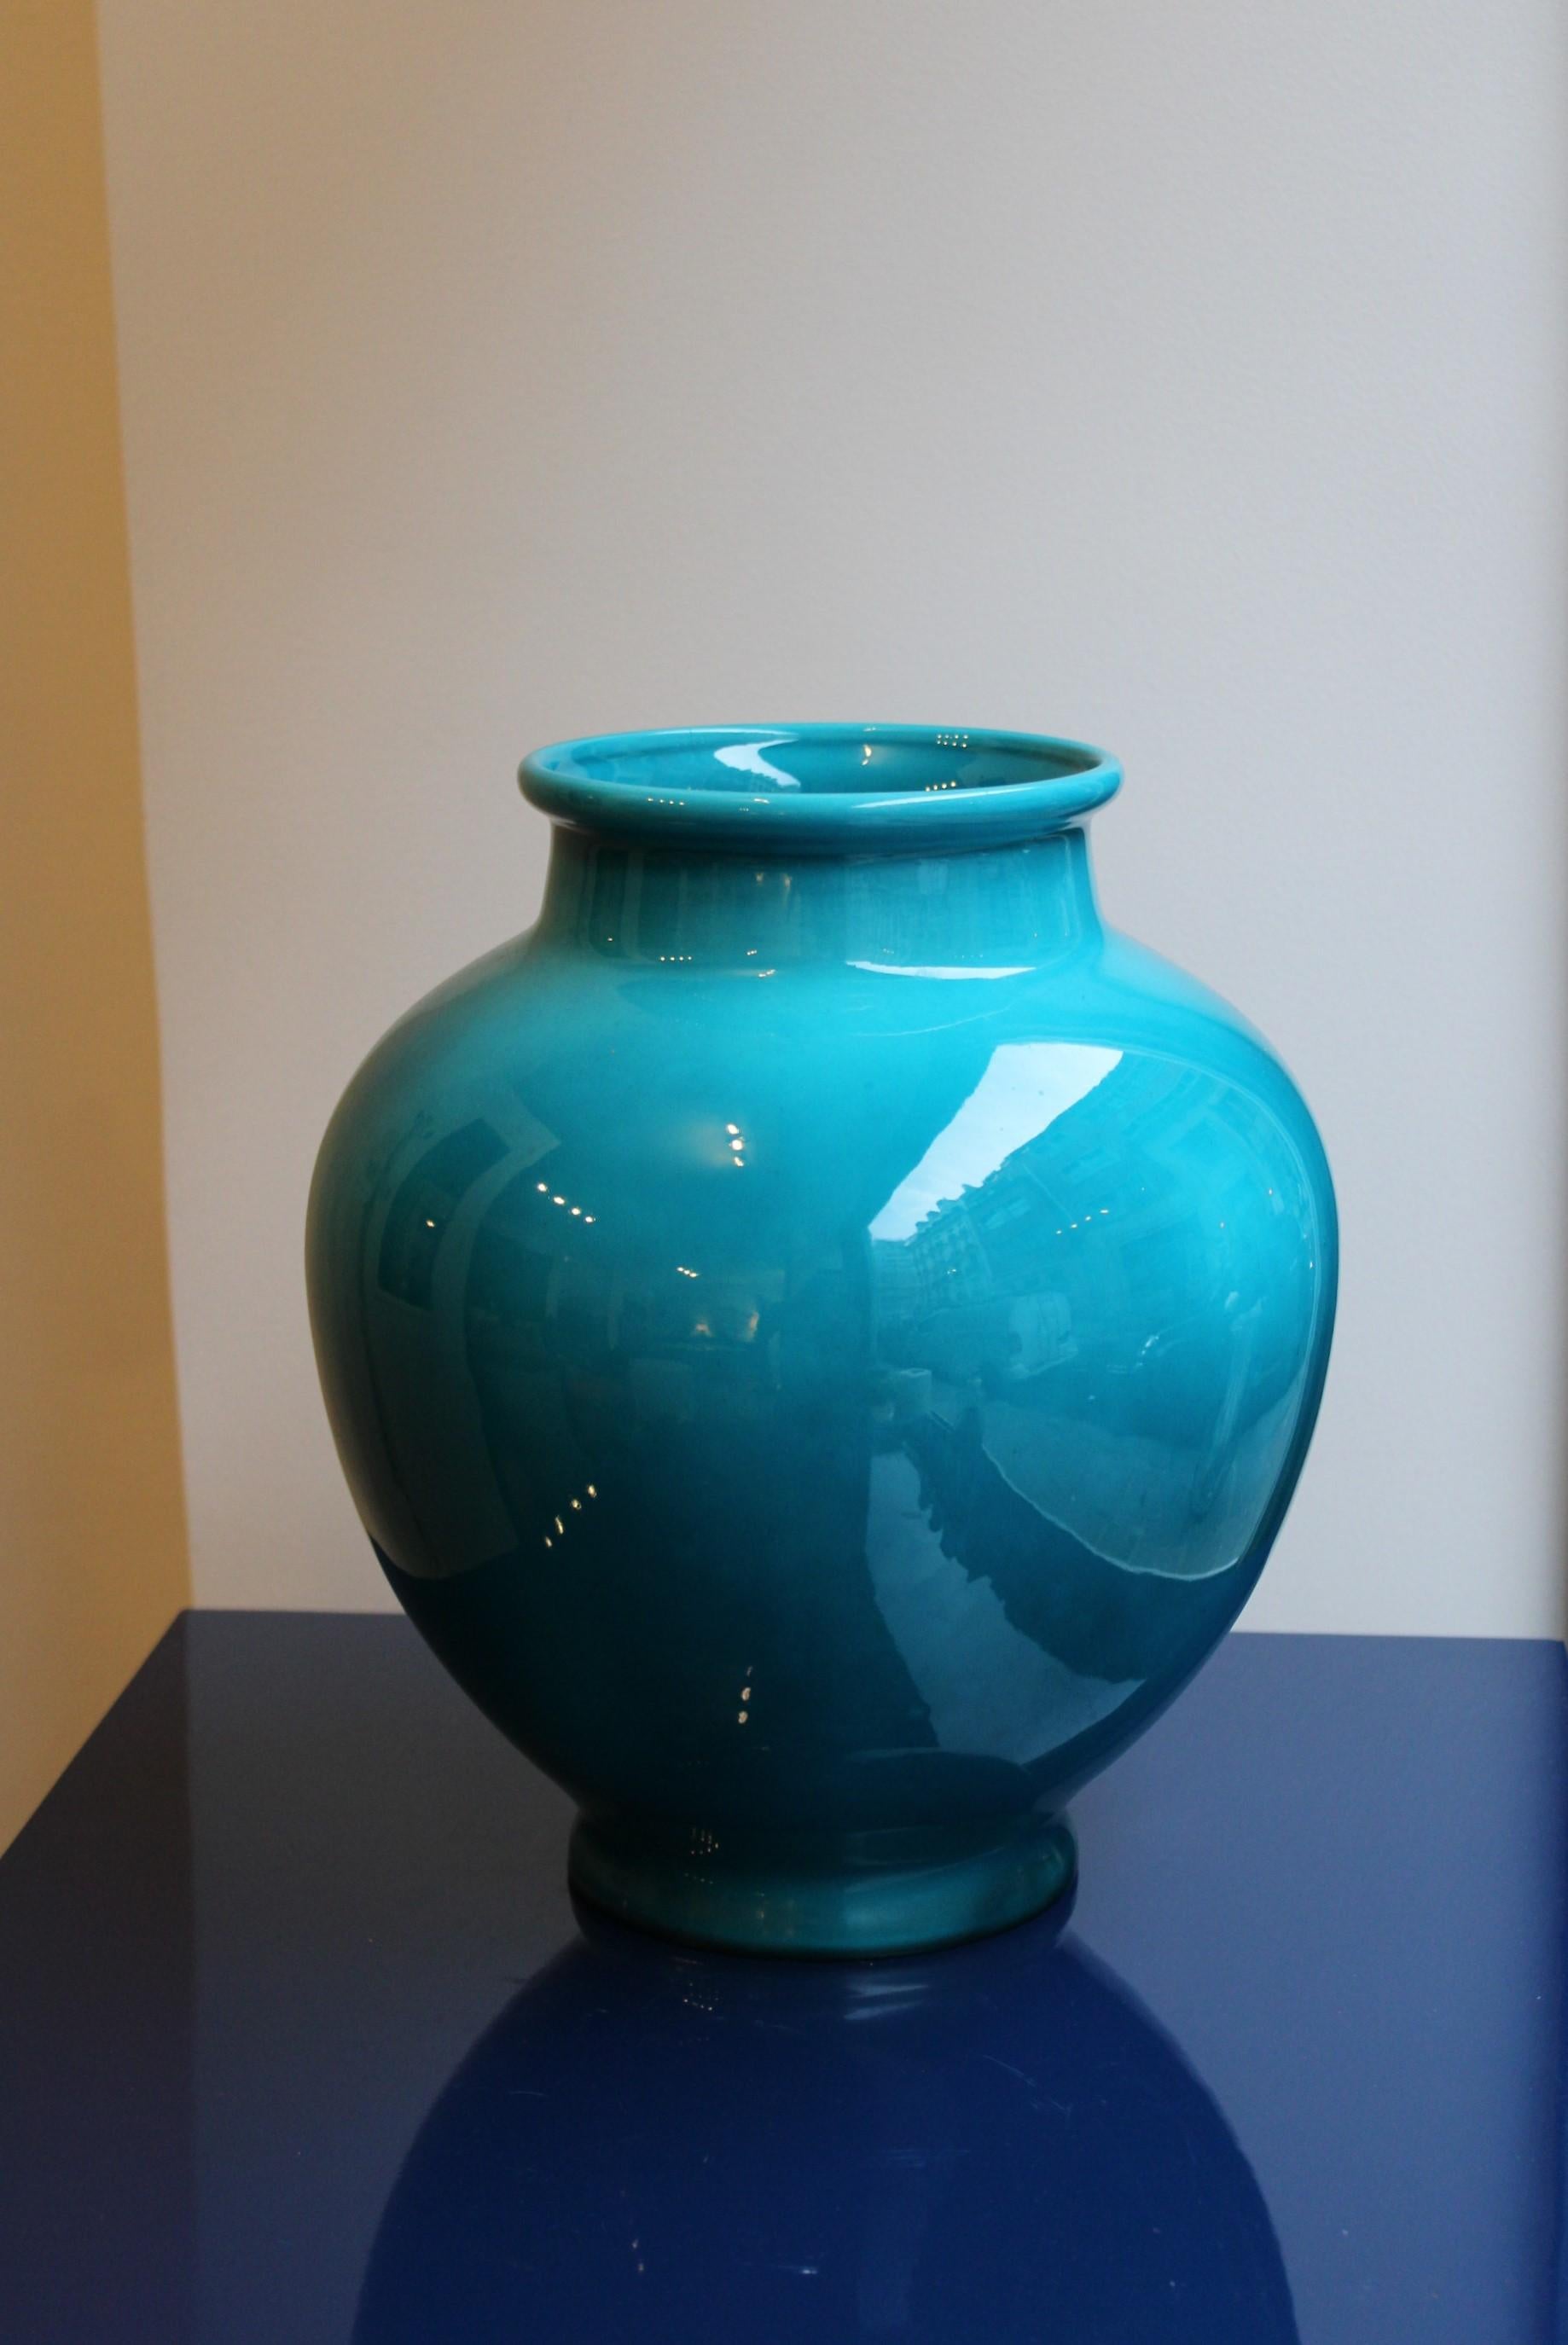 Blue vase in enameled ceramic
Signed under the base 